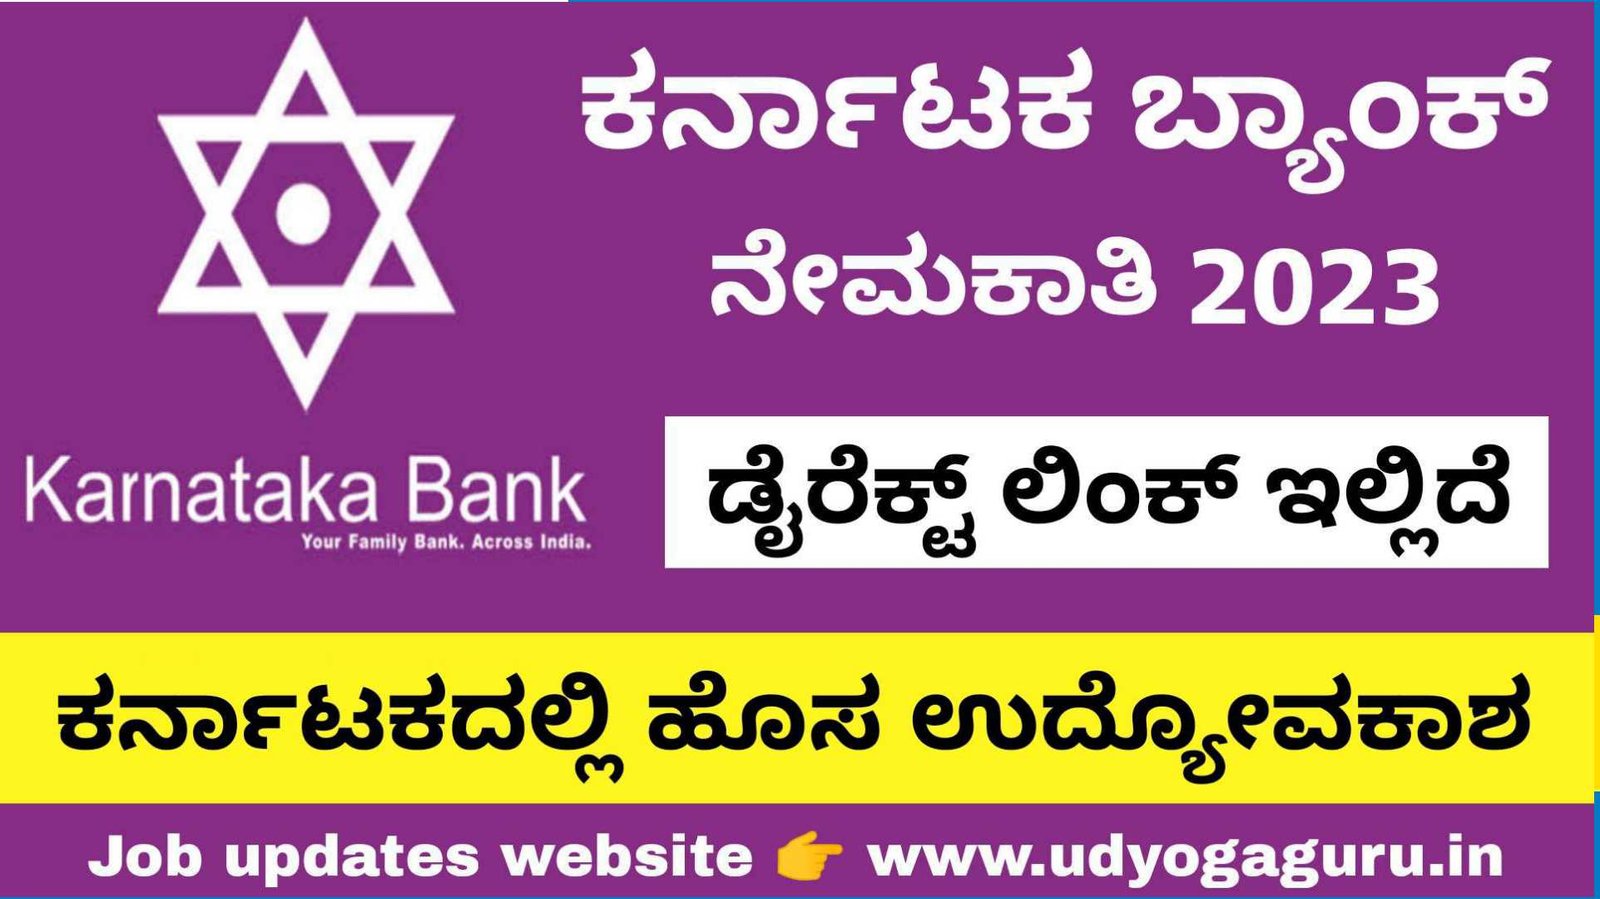 Karnataka Bank: Karnataka Bank launches month long KBL Suraksha campaign |  Mangaluru News - Times of India